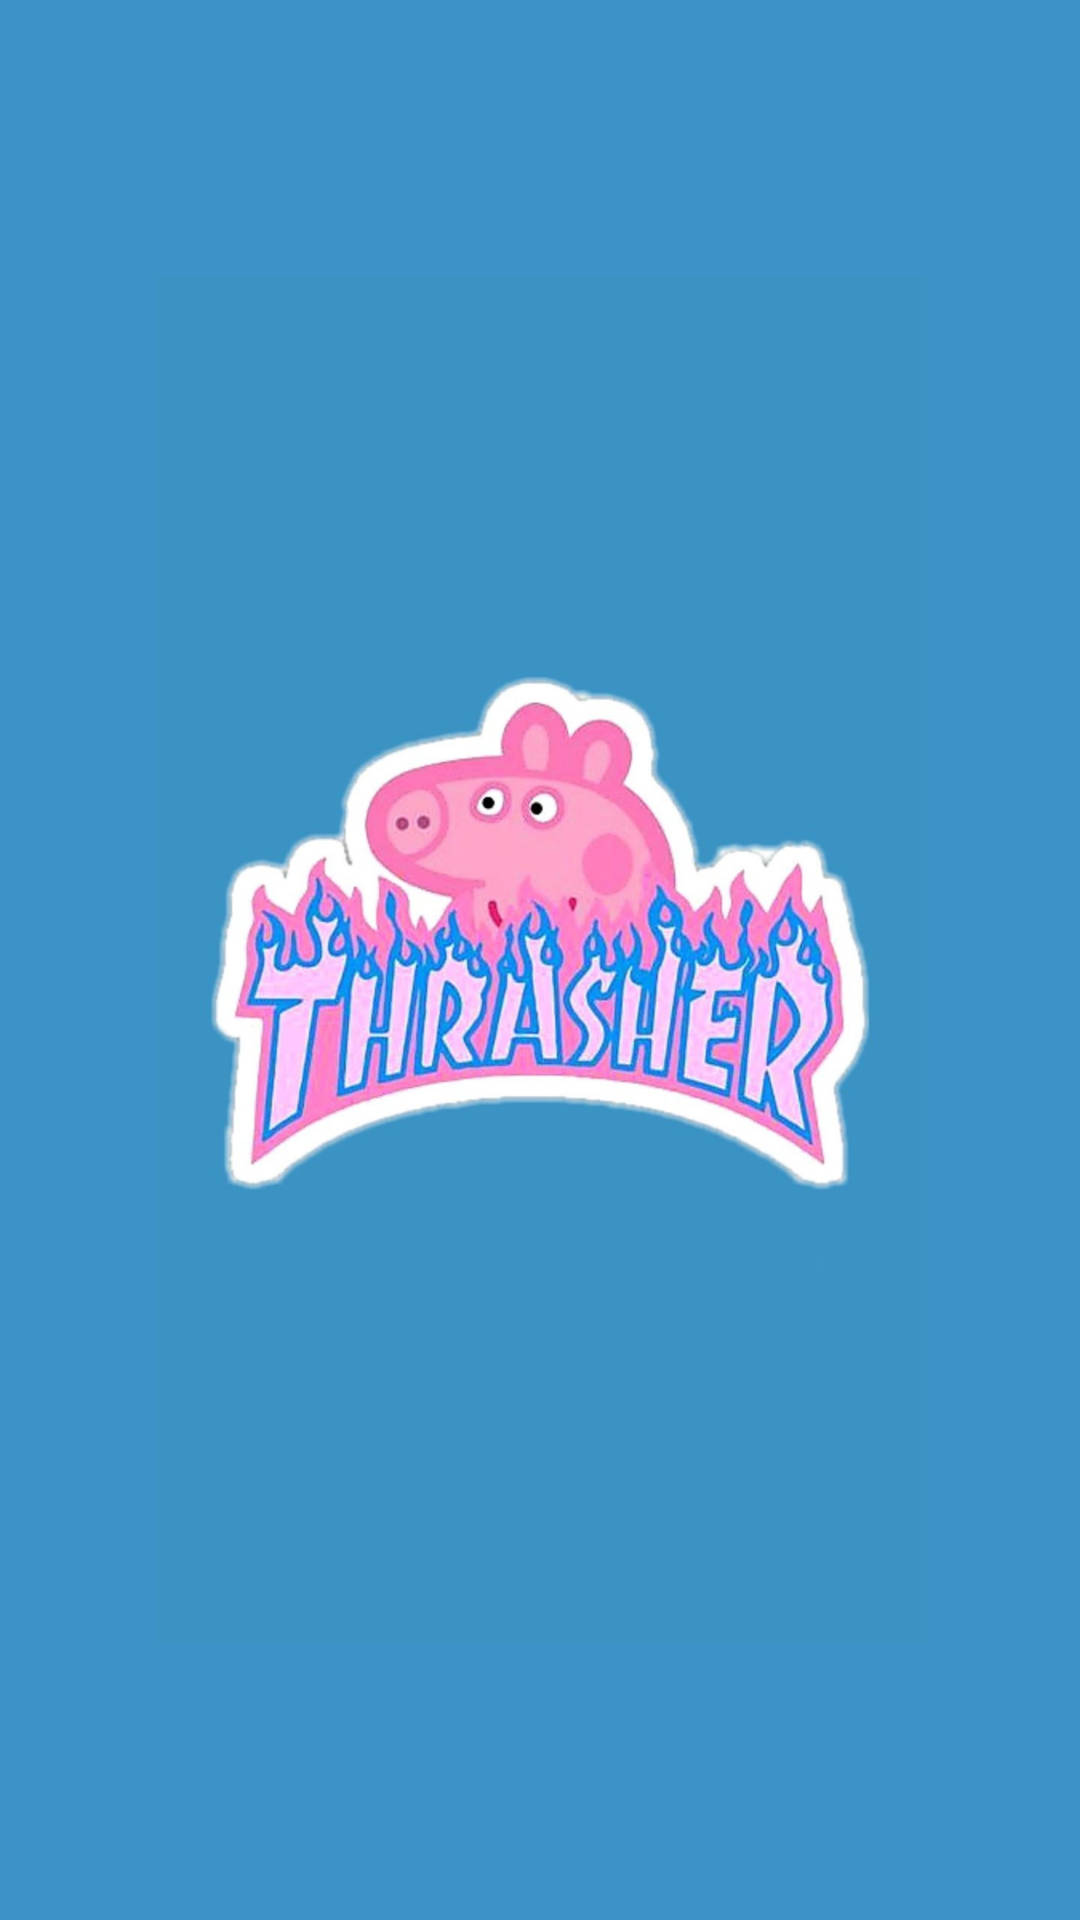 Thrasherpeppa Pig Would Translate To 